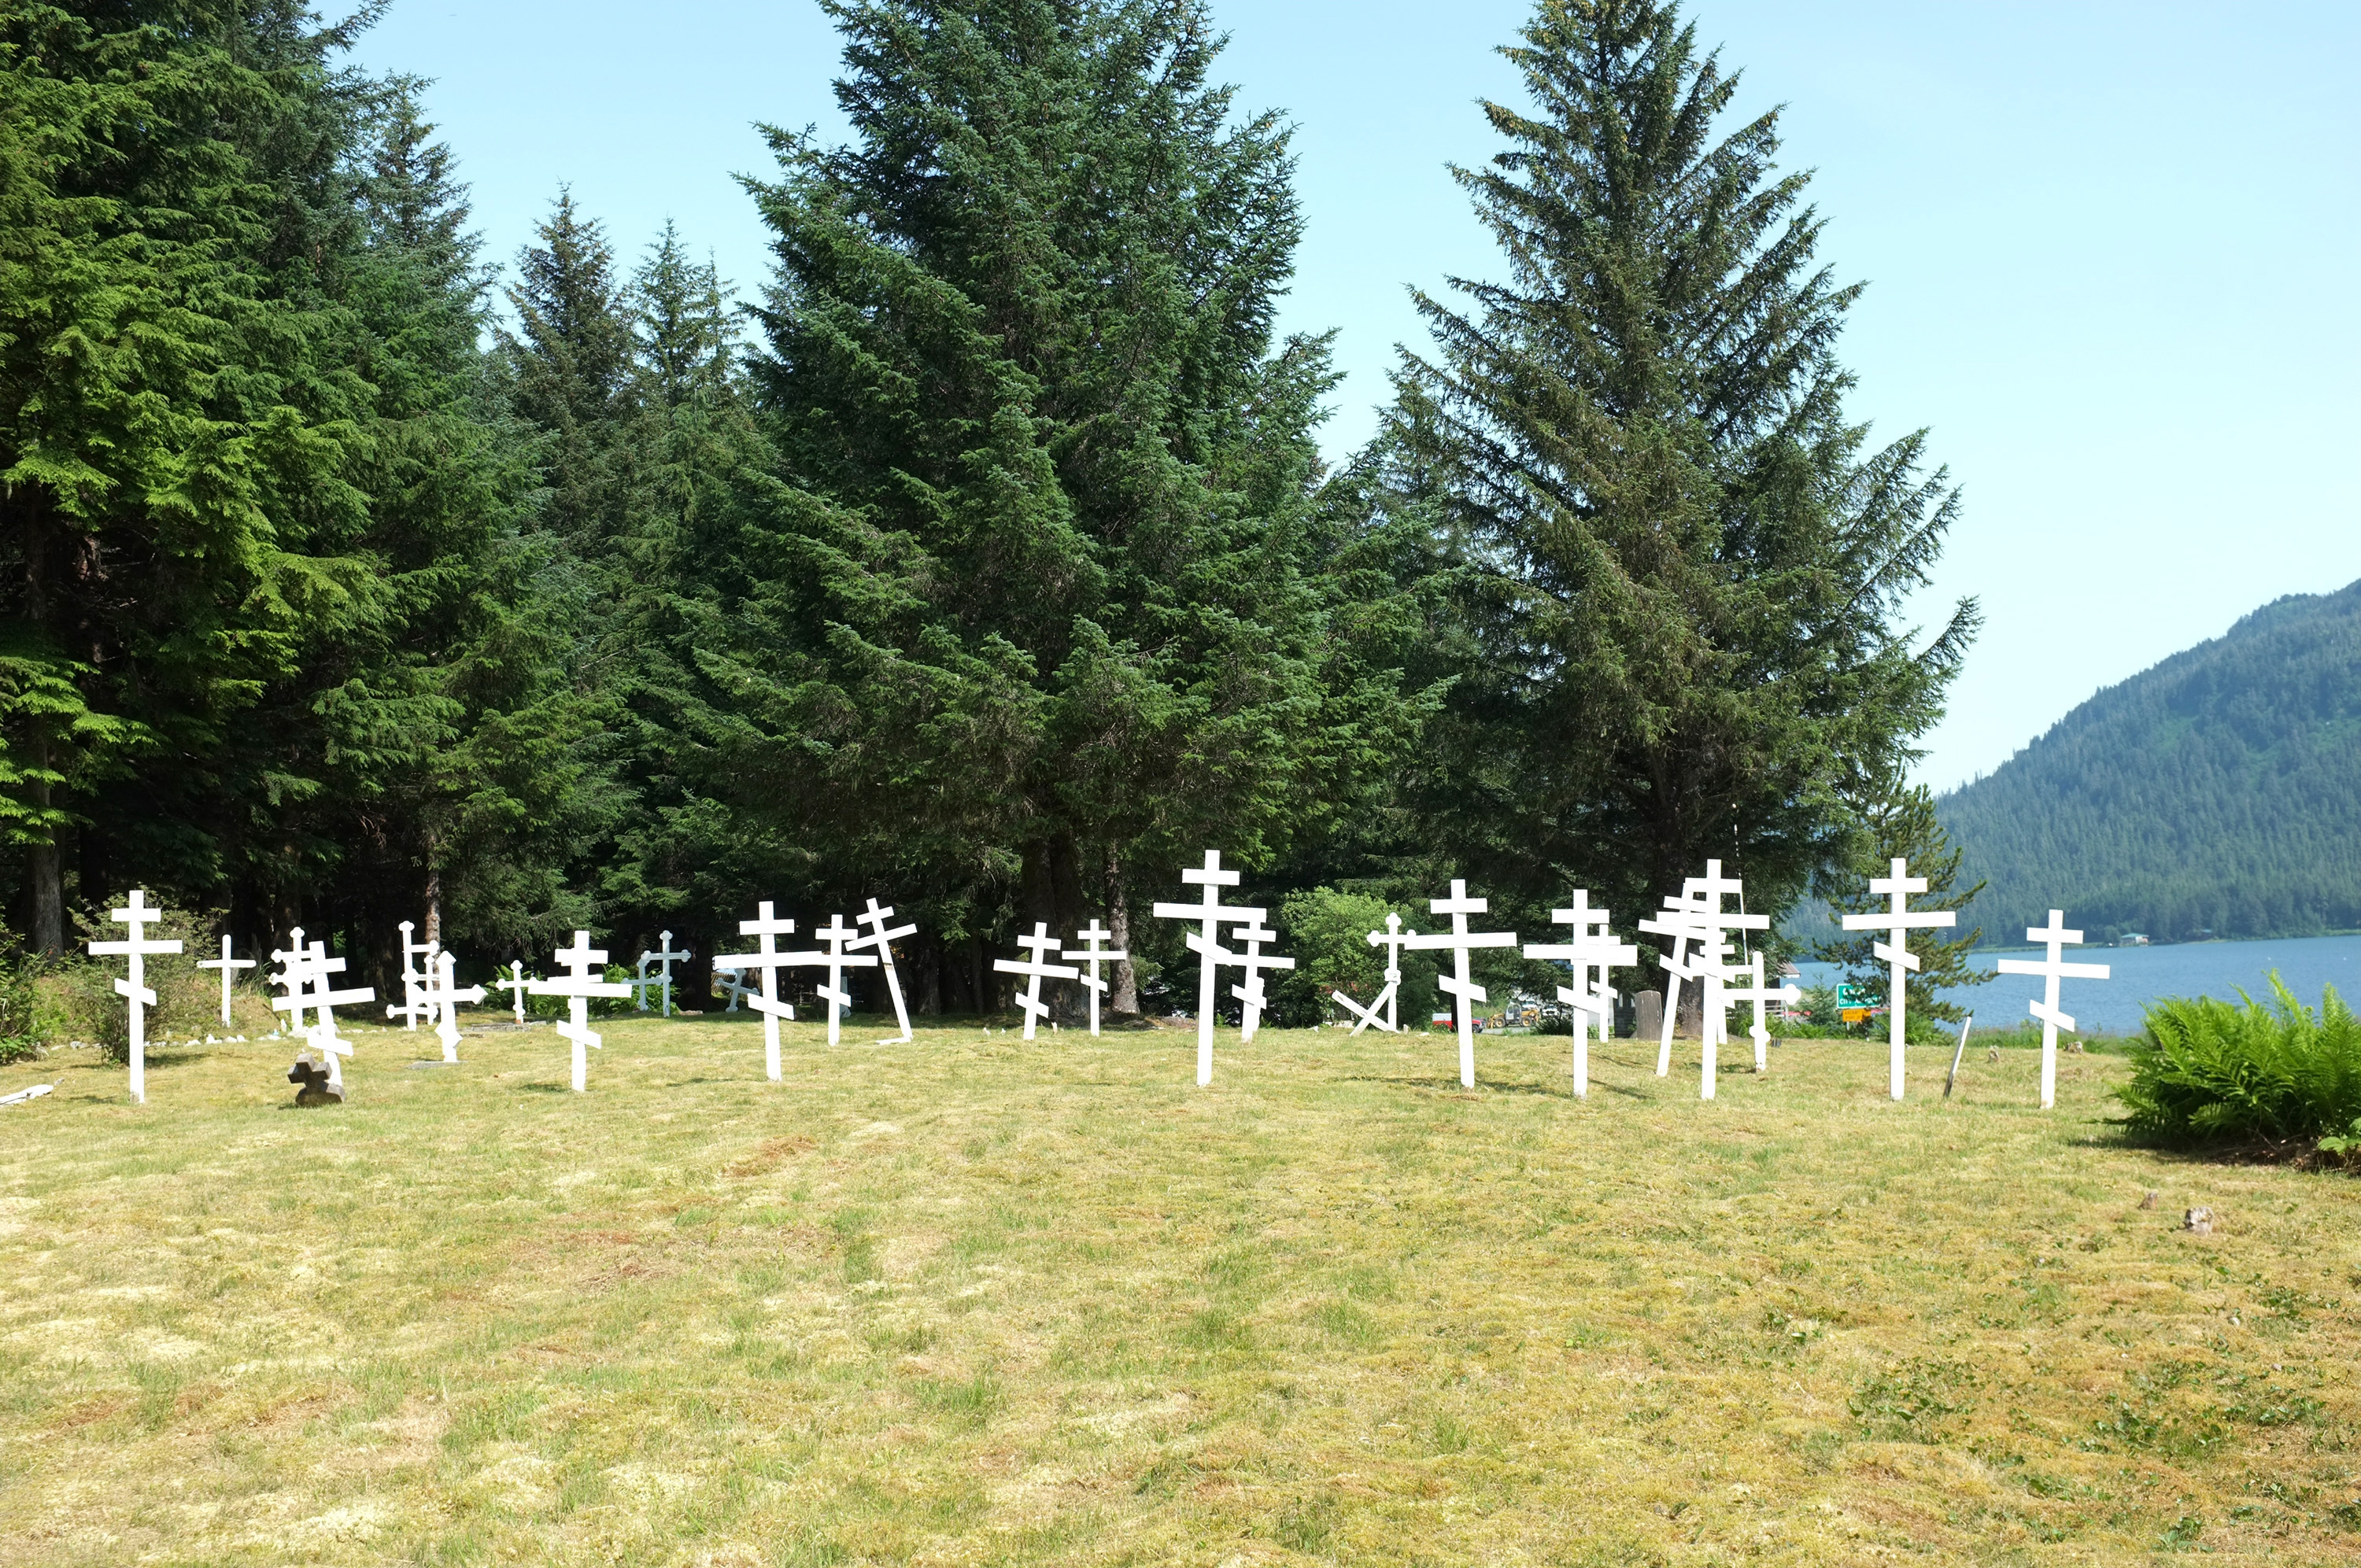 Russian graveyard near Eyak Lake in Cordova AK